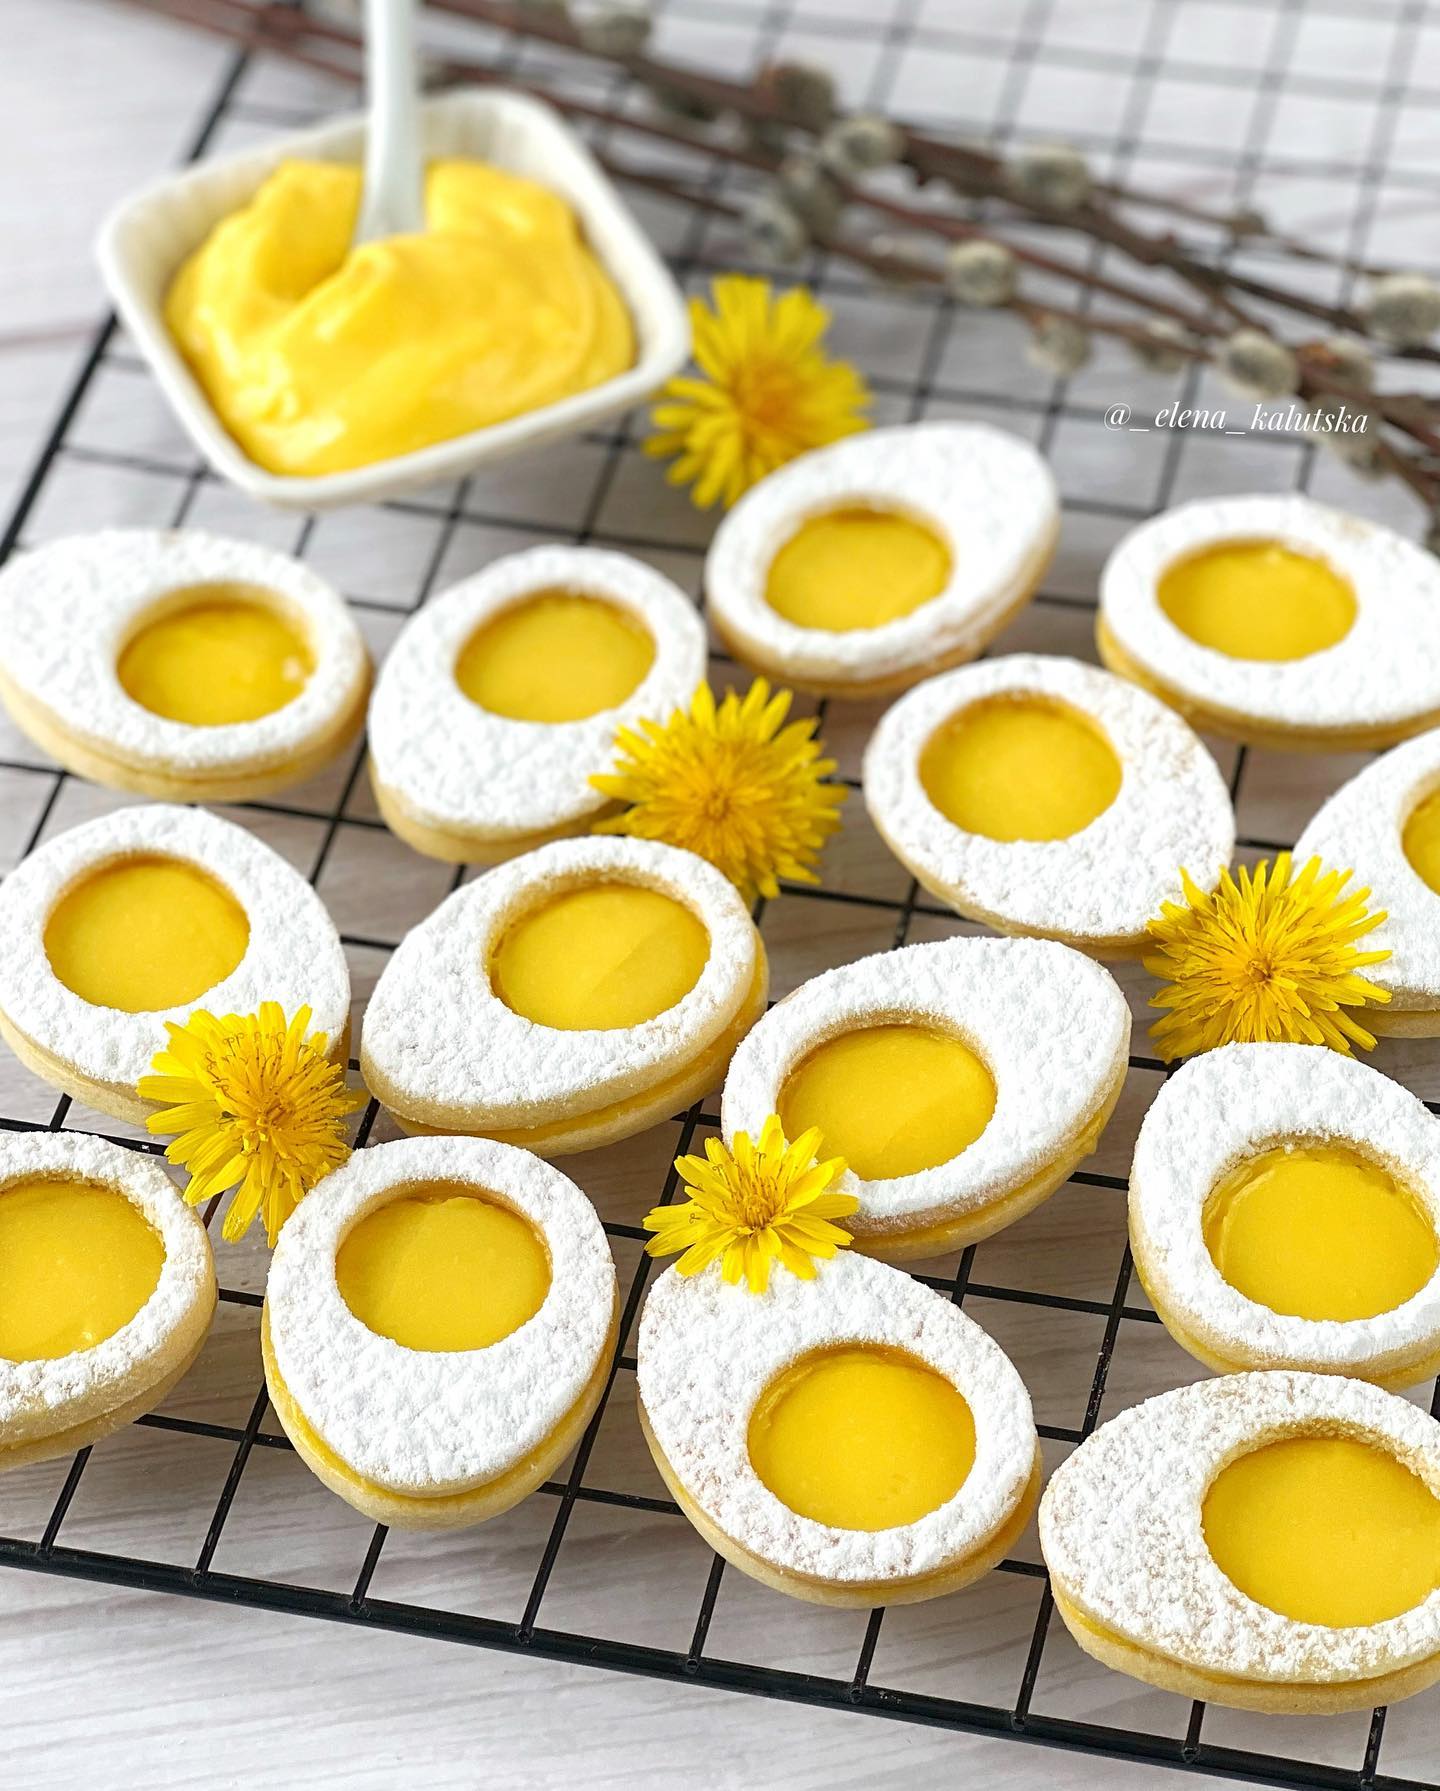 Egg cookies with lemon curd